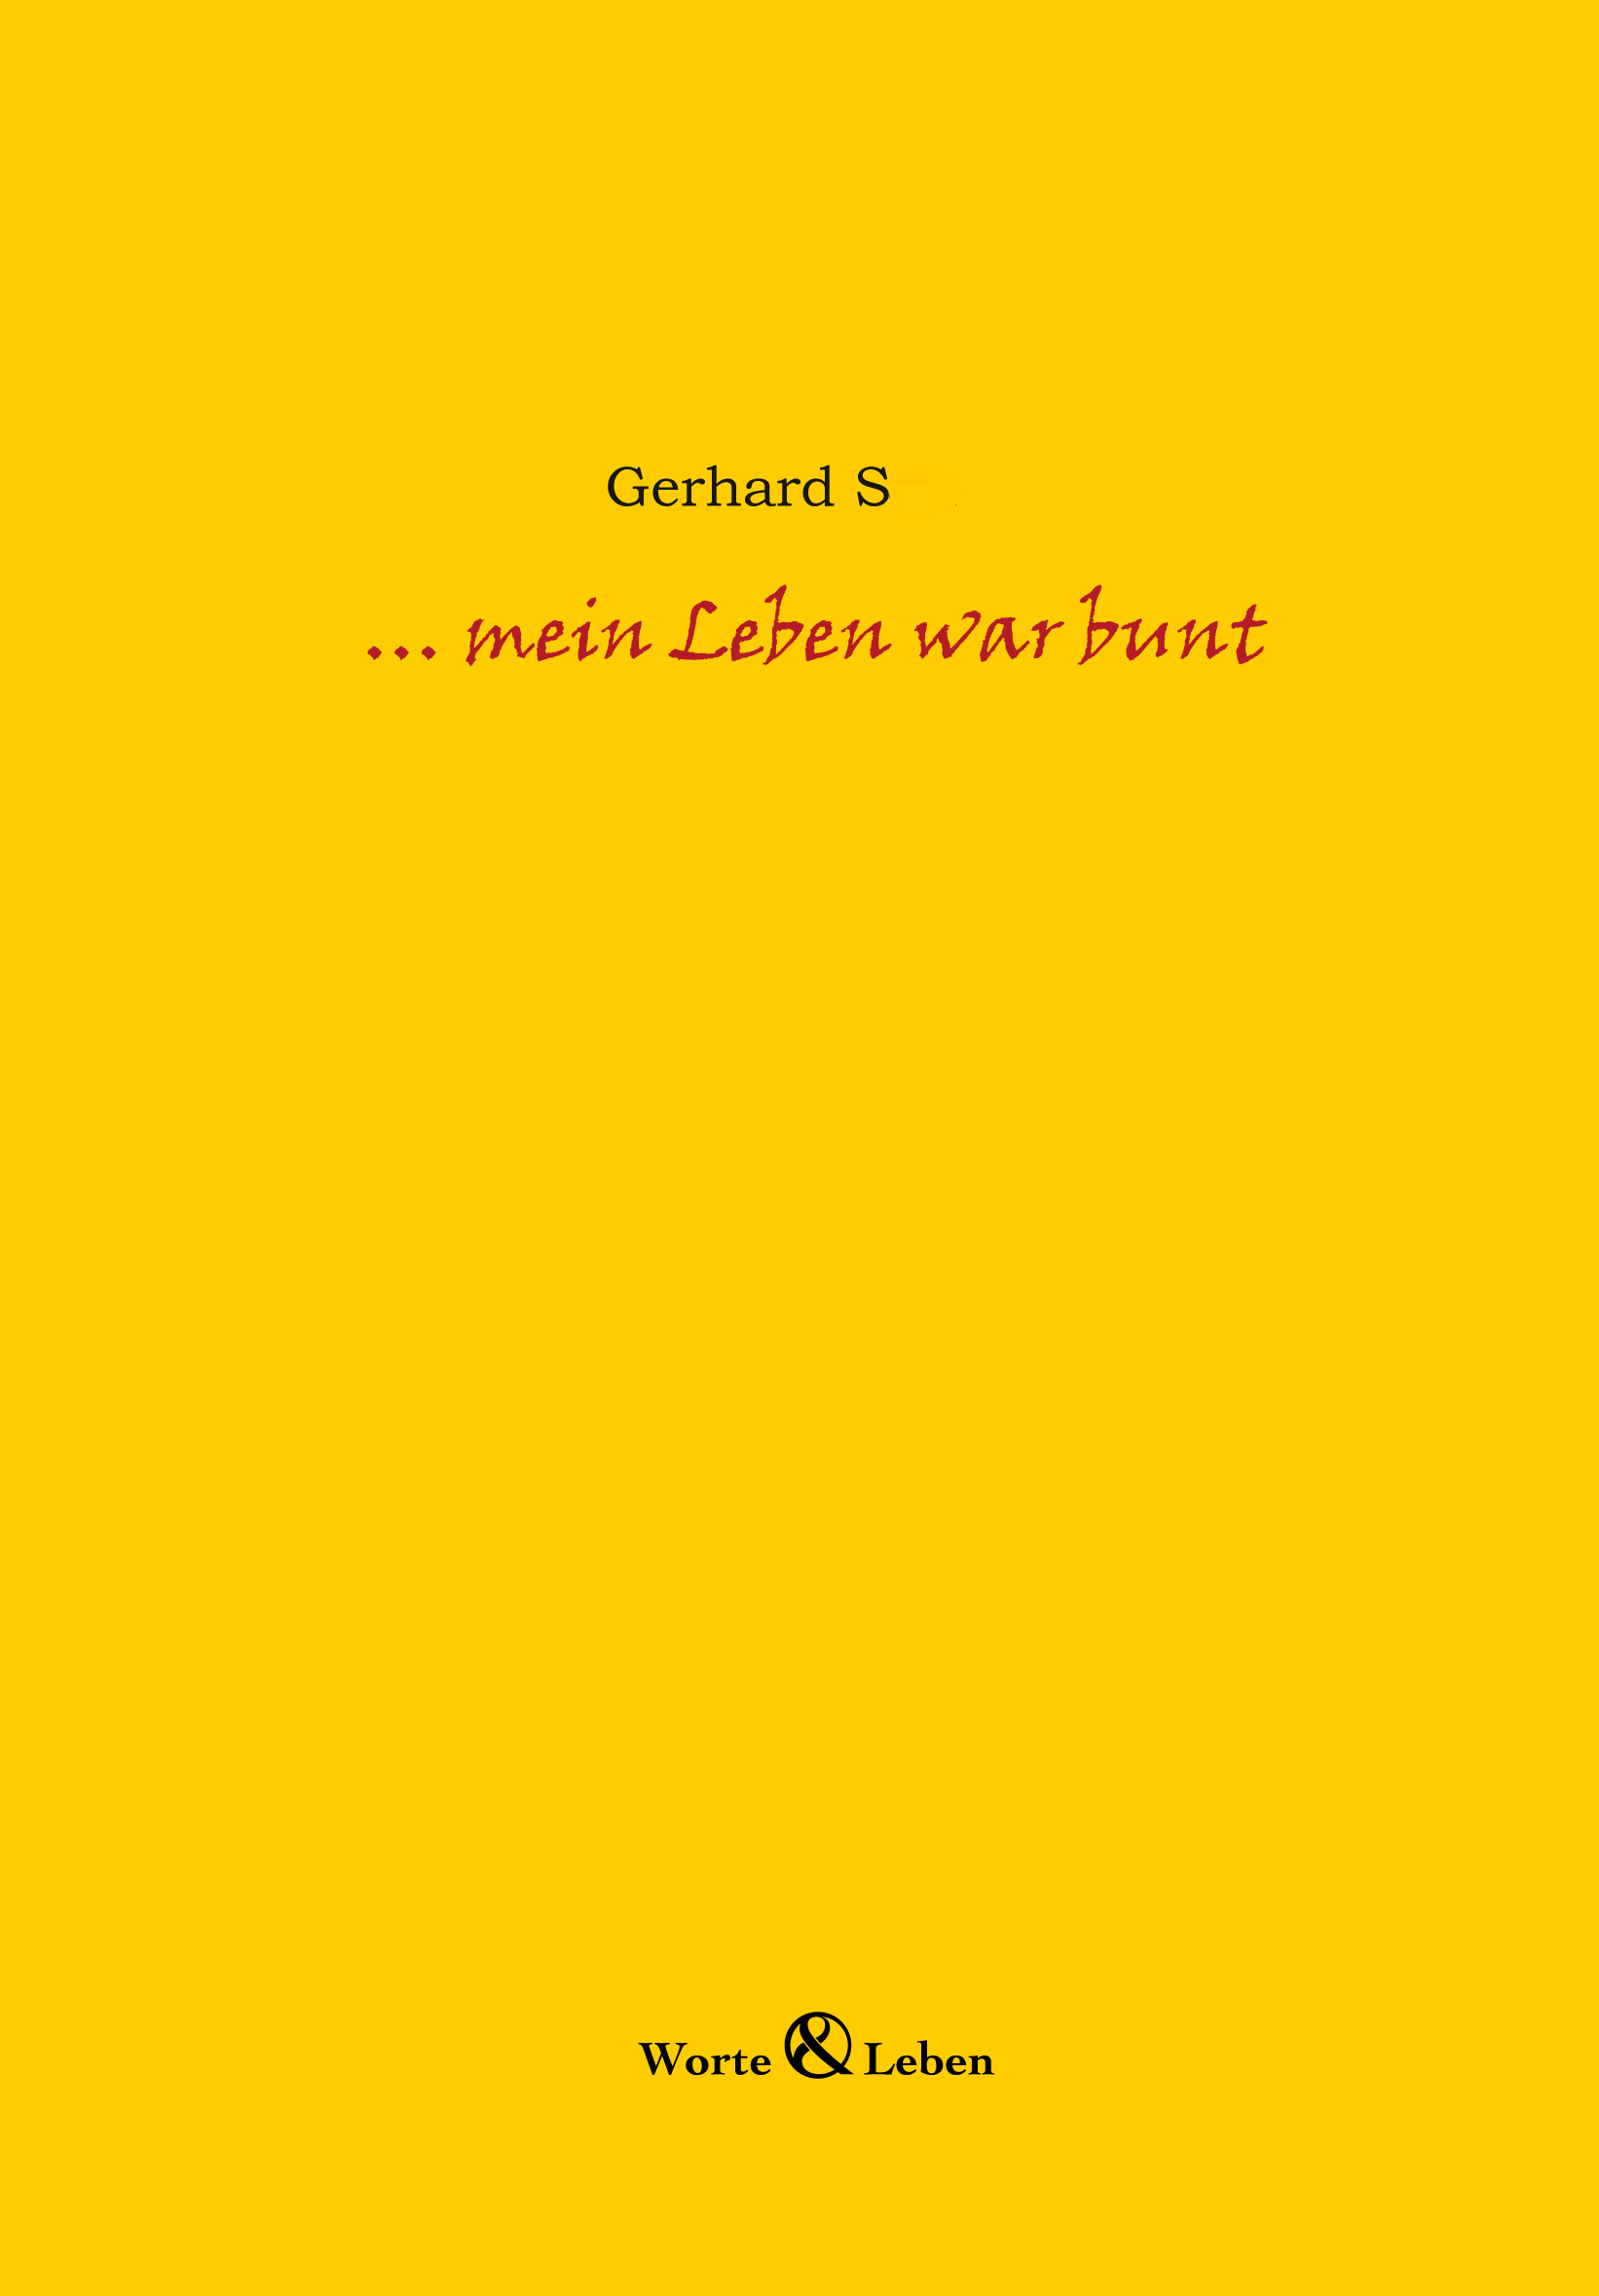 Gerhard S.: ... mein Leben war bunt